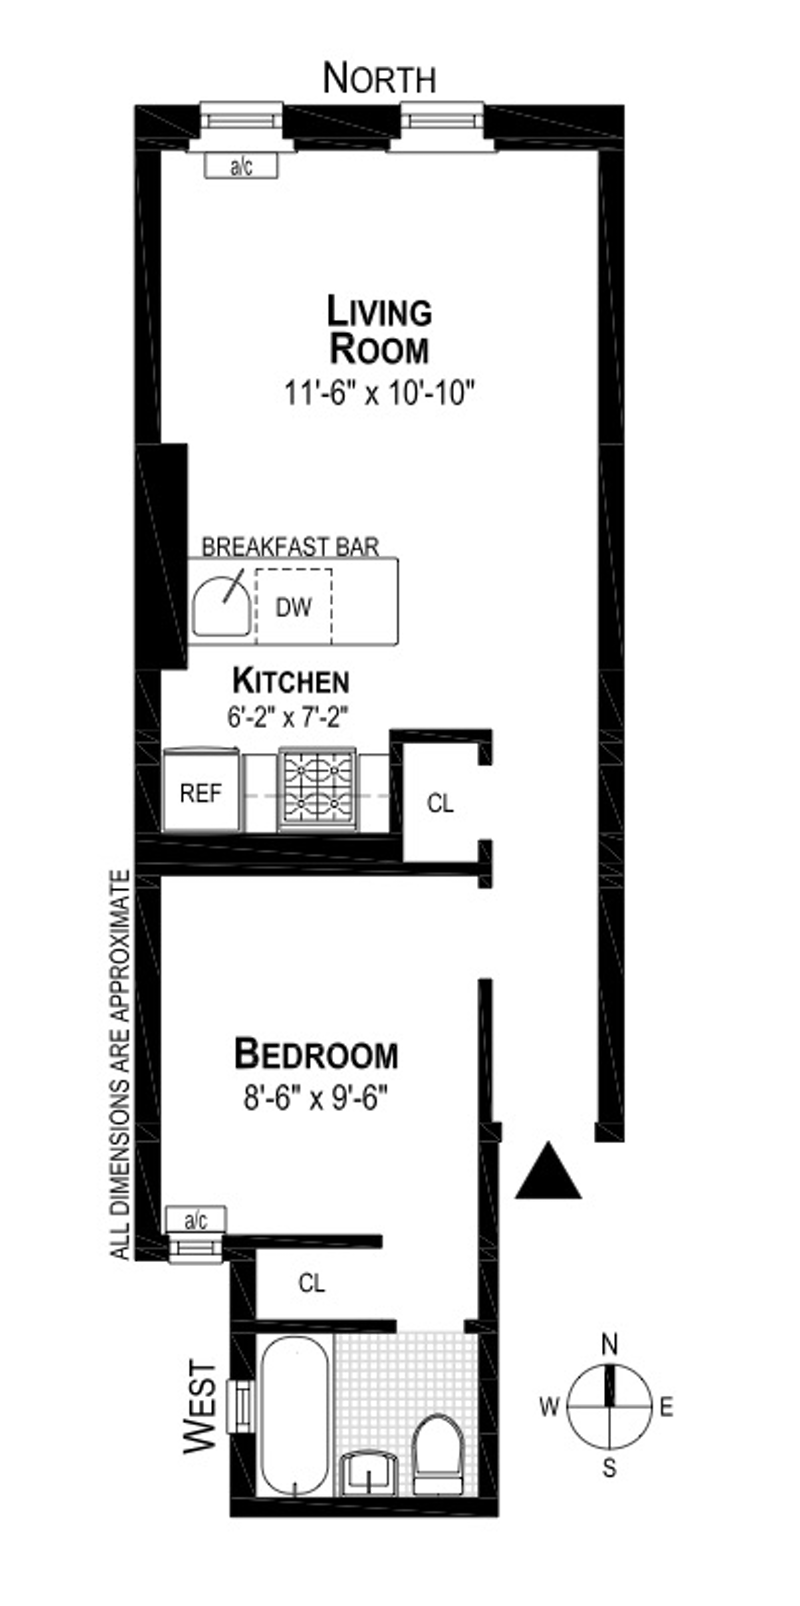 Floorplan for 237 East 88th Street